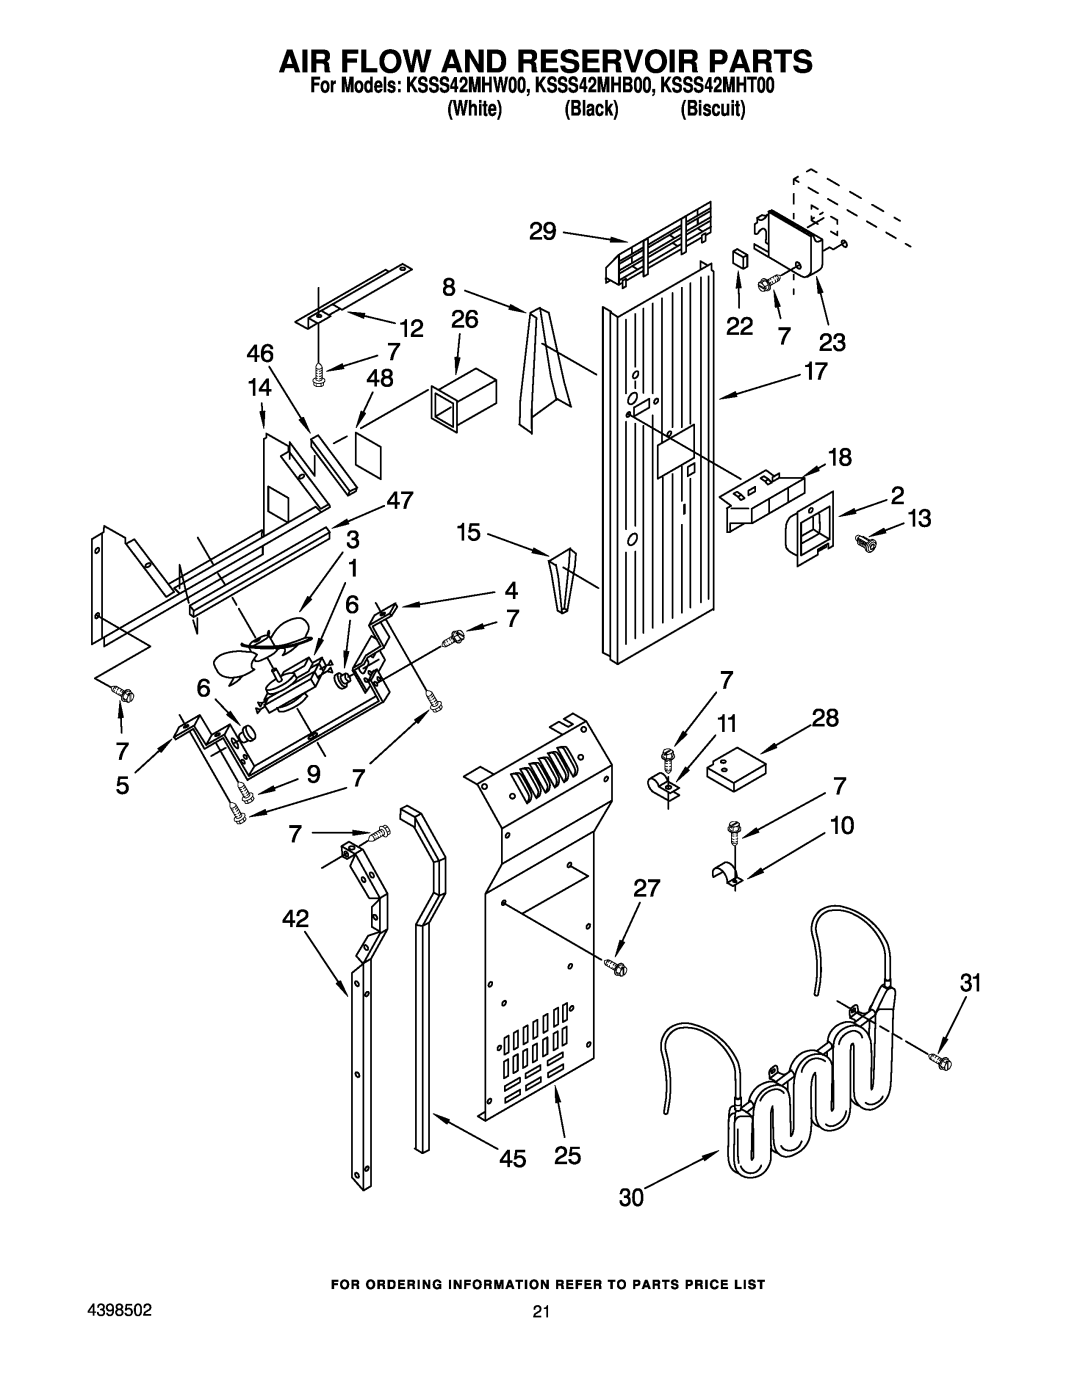 KitchenAid manual Air Flow And Reservoir Parts, For Models KSSS42MHW00, KSSS42MHB00, KSSS42MHT00 White Black Biscuit 